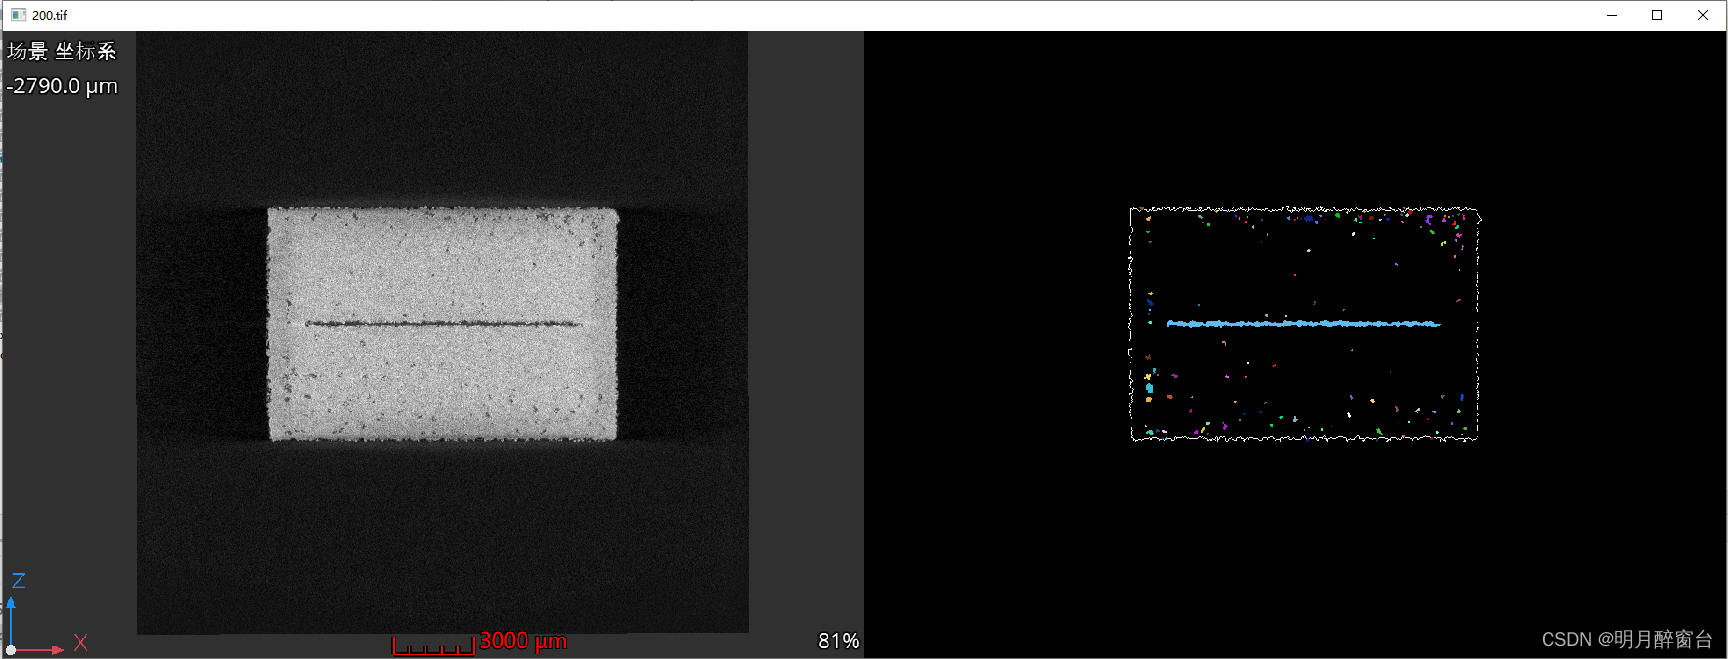 Python - Opencv应用实例之CT图像检测边缘和内部缺陷